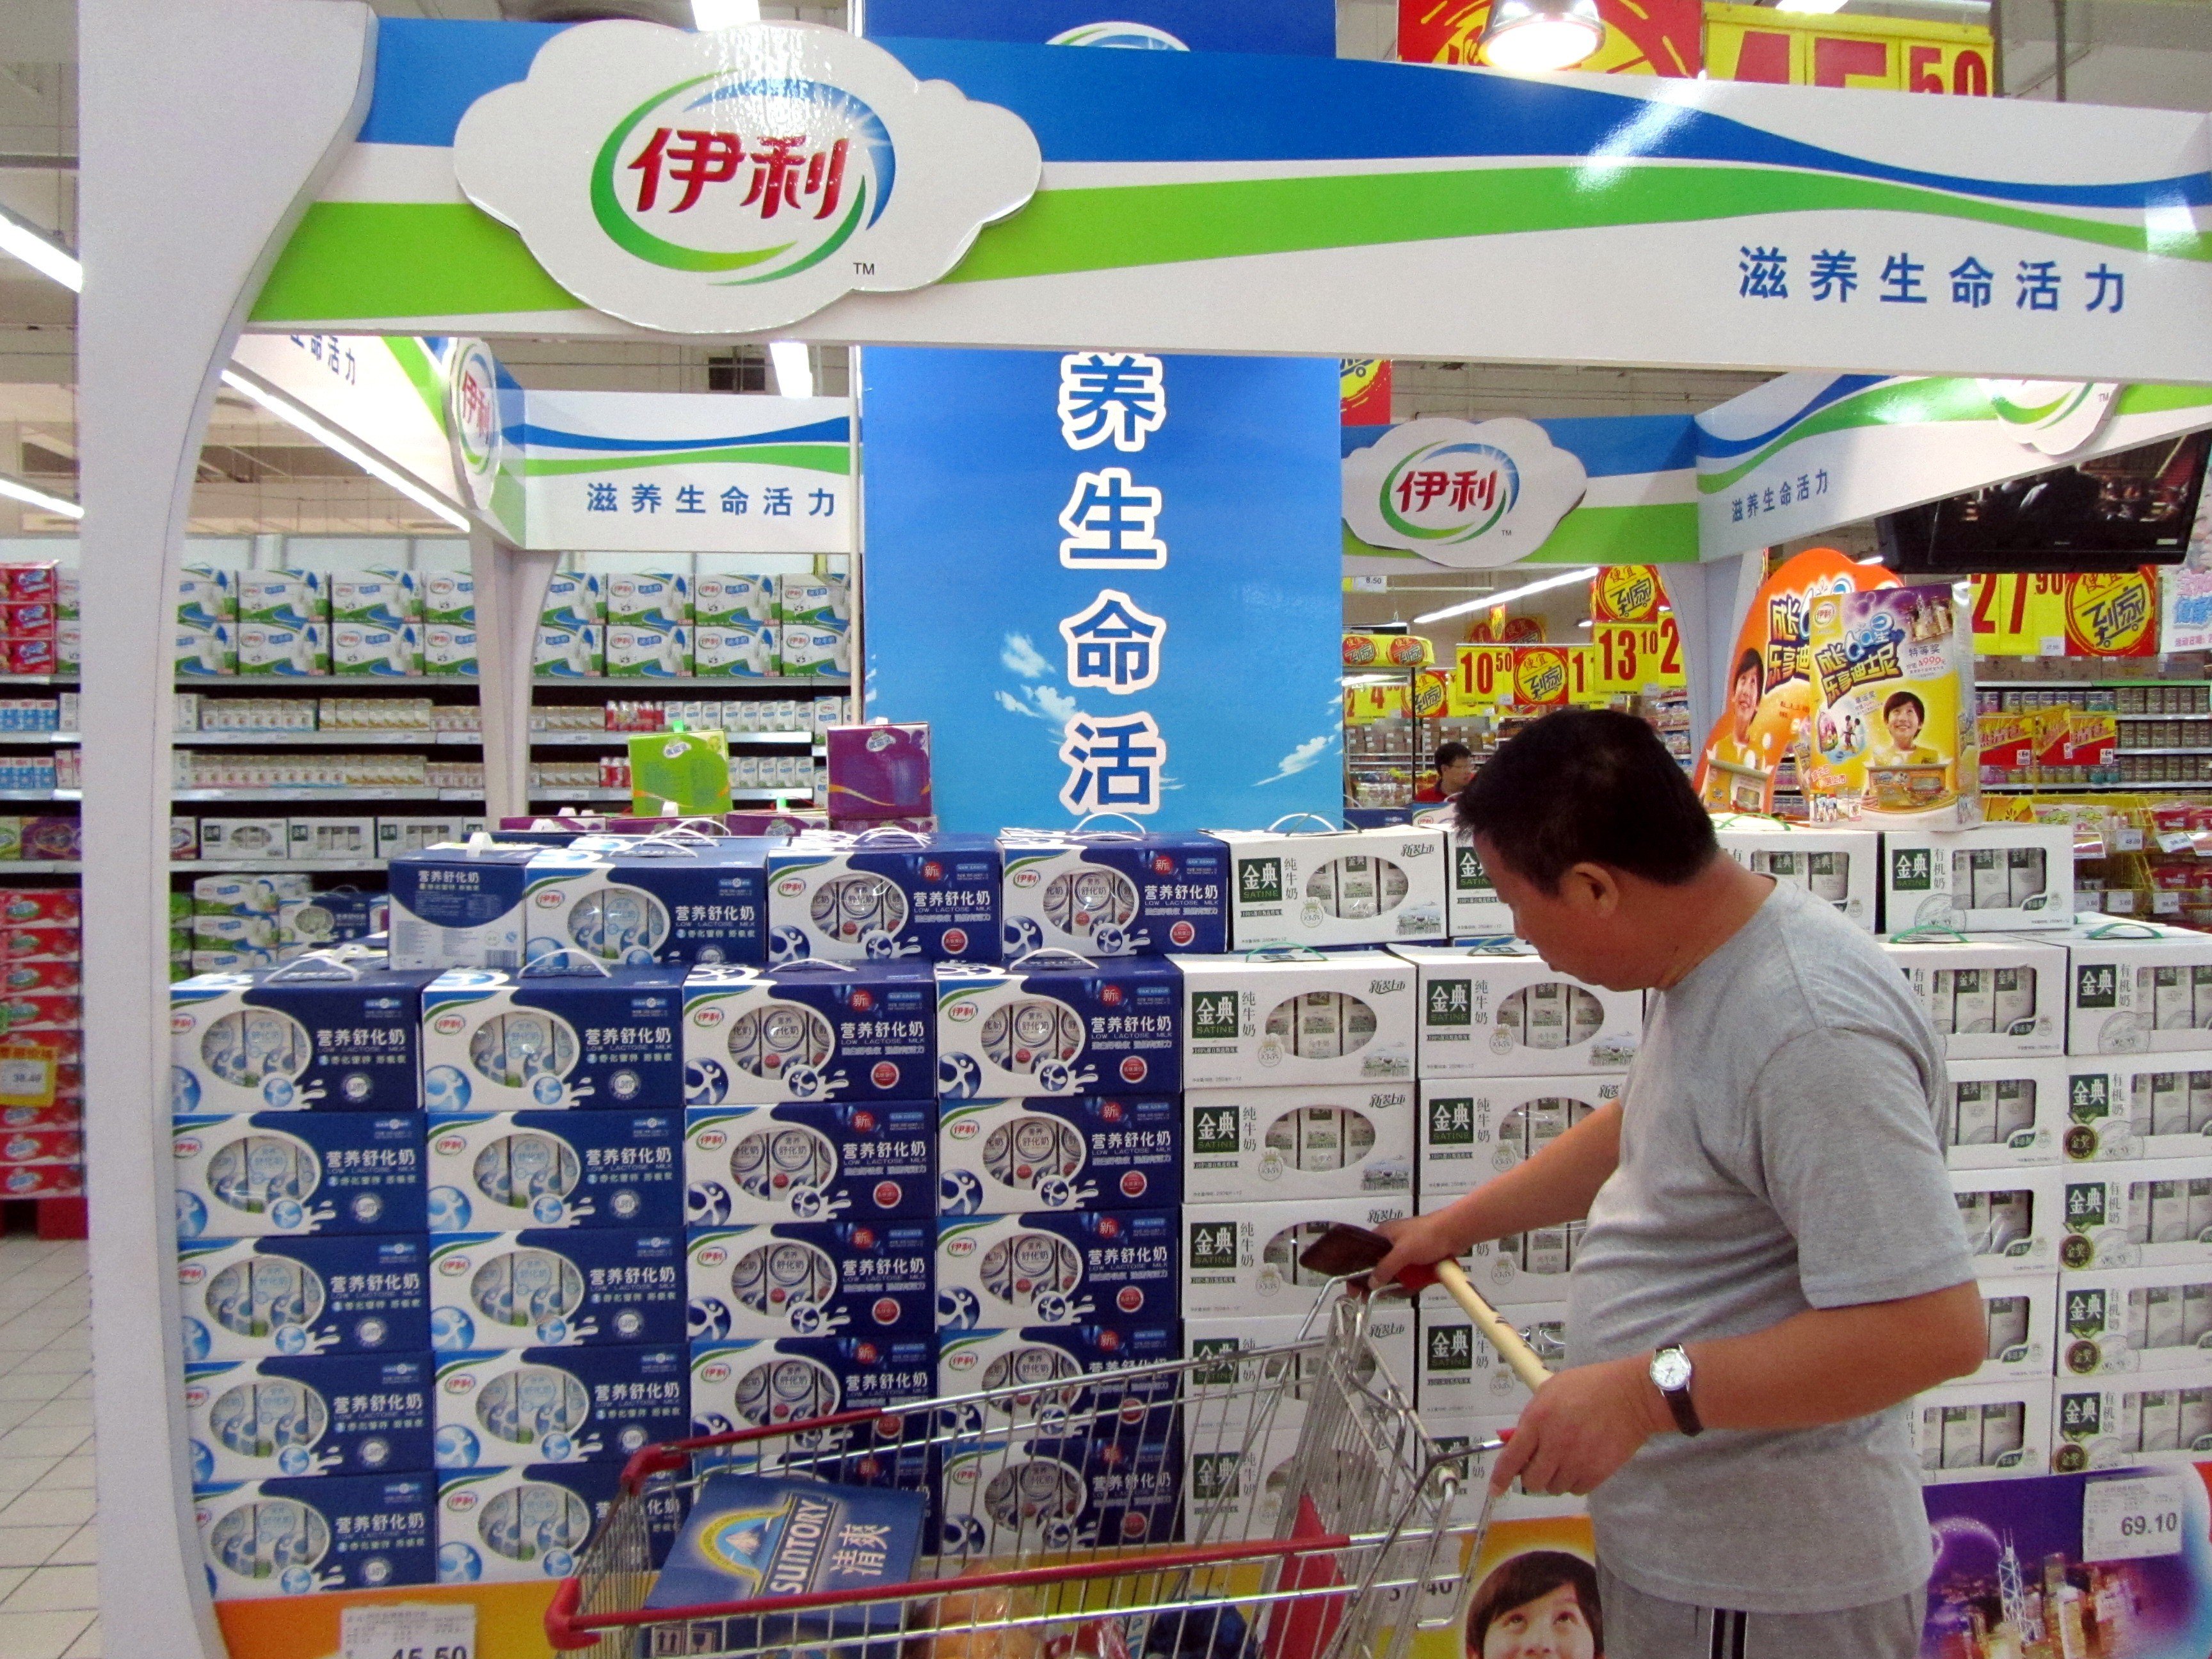 Yili milk products on display in a supermarket in Shanghai, China. Photo: Imaginechina